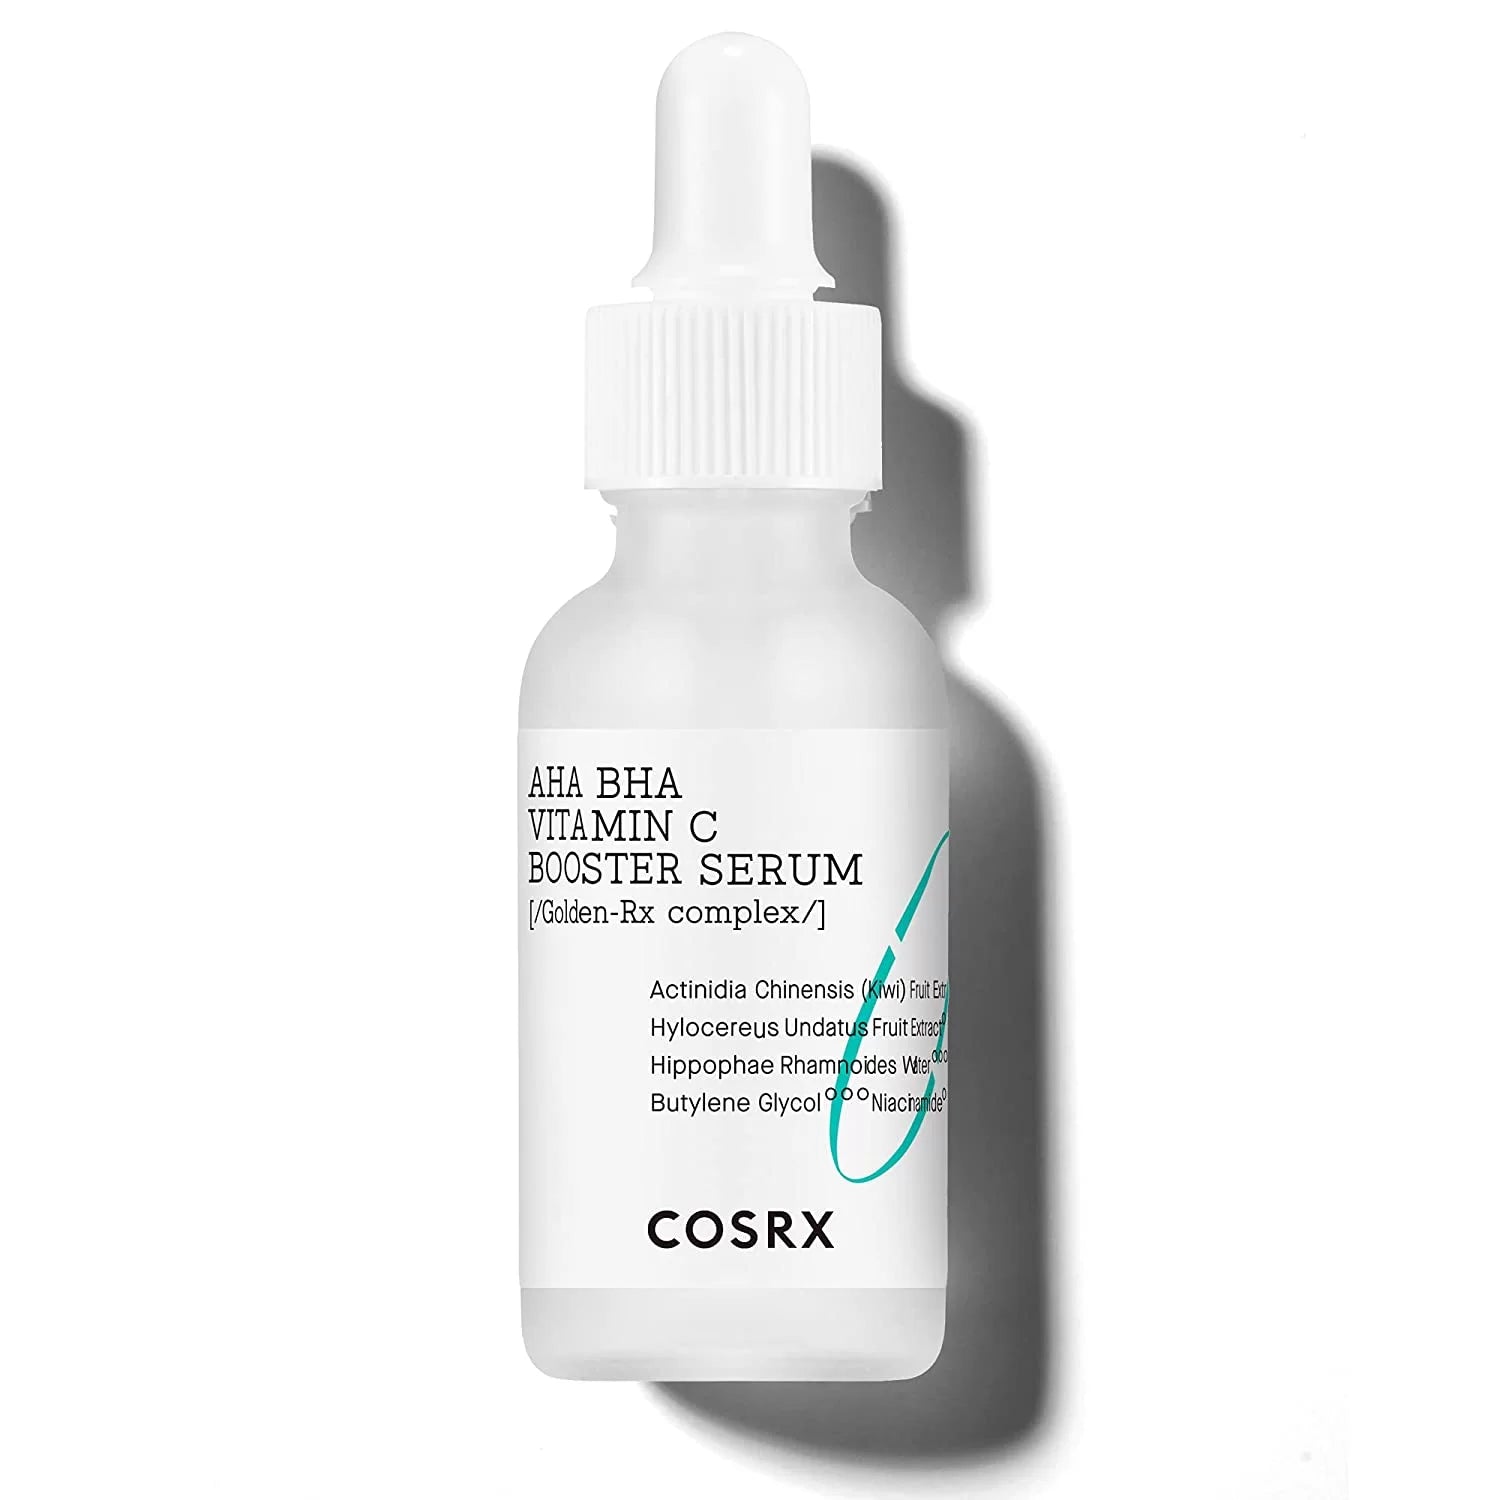 COSRX - AHA BHA Vitamin C Booster Serum